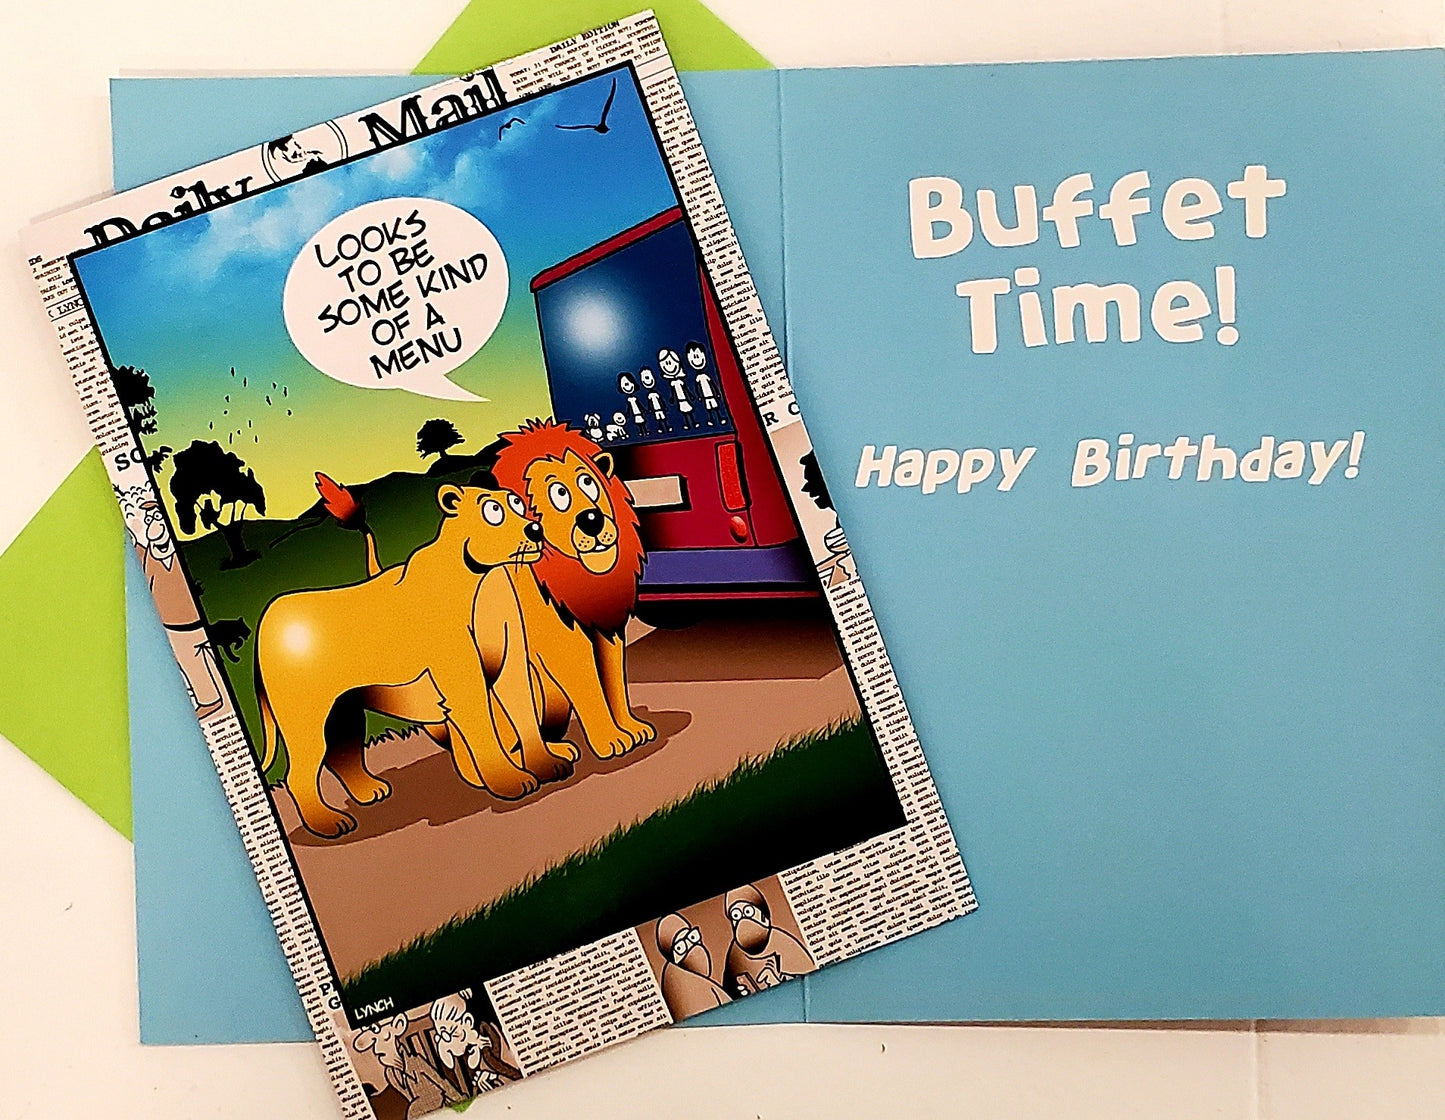 Buffet Time Humor Birthday by Mark Lynch- Retail $2.99 . Inside: Buffet Time! Happy Birthday!